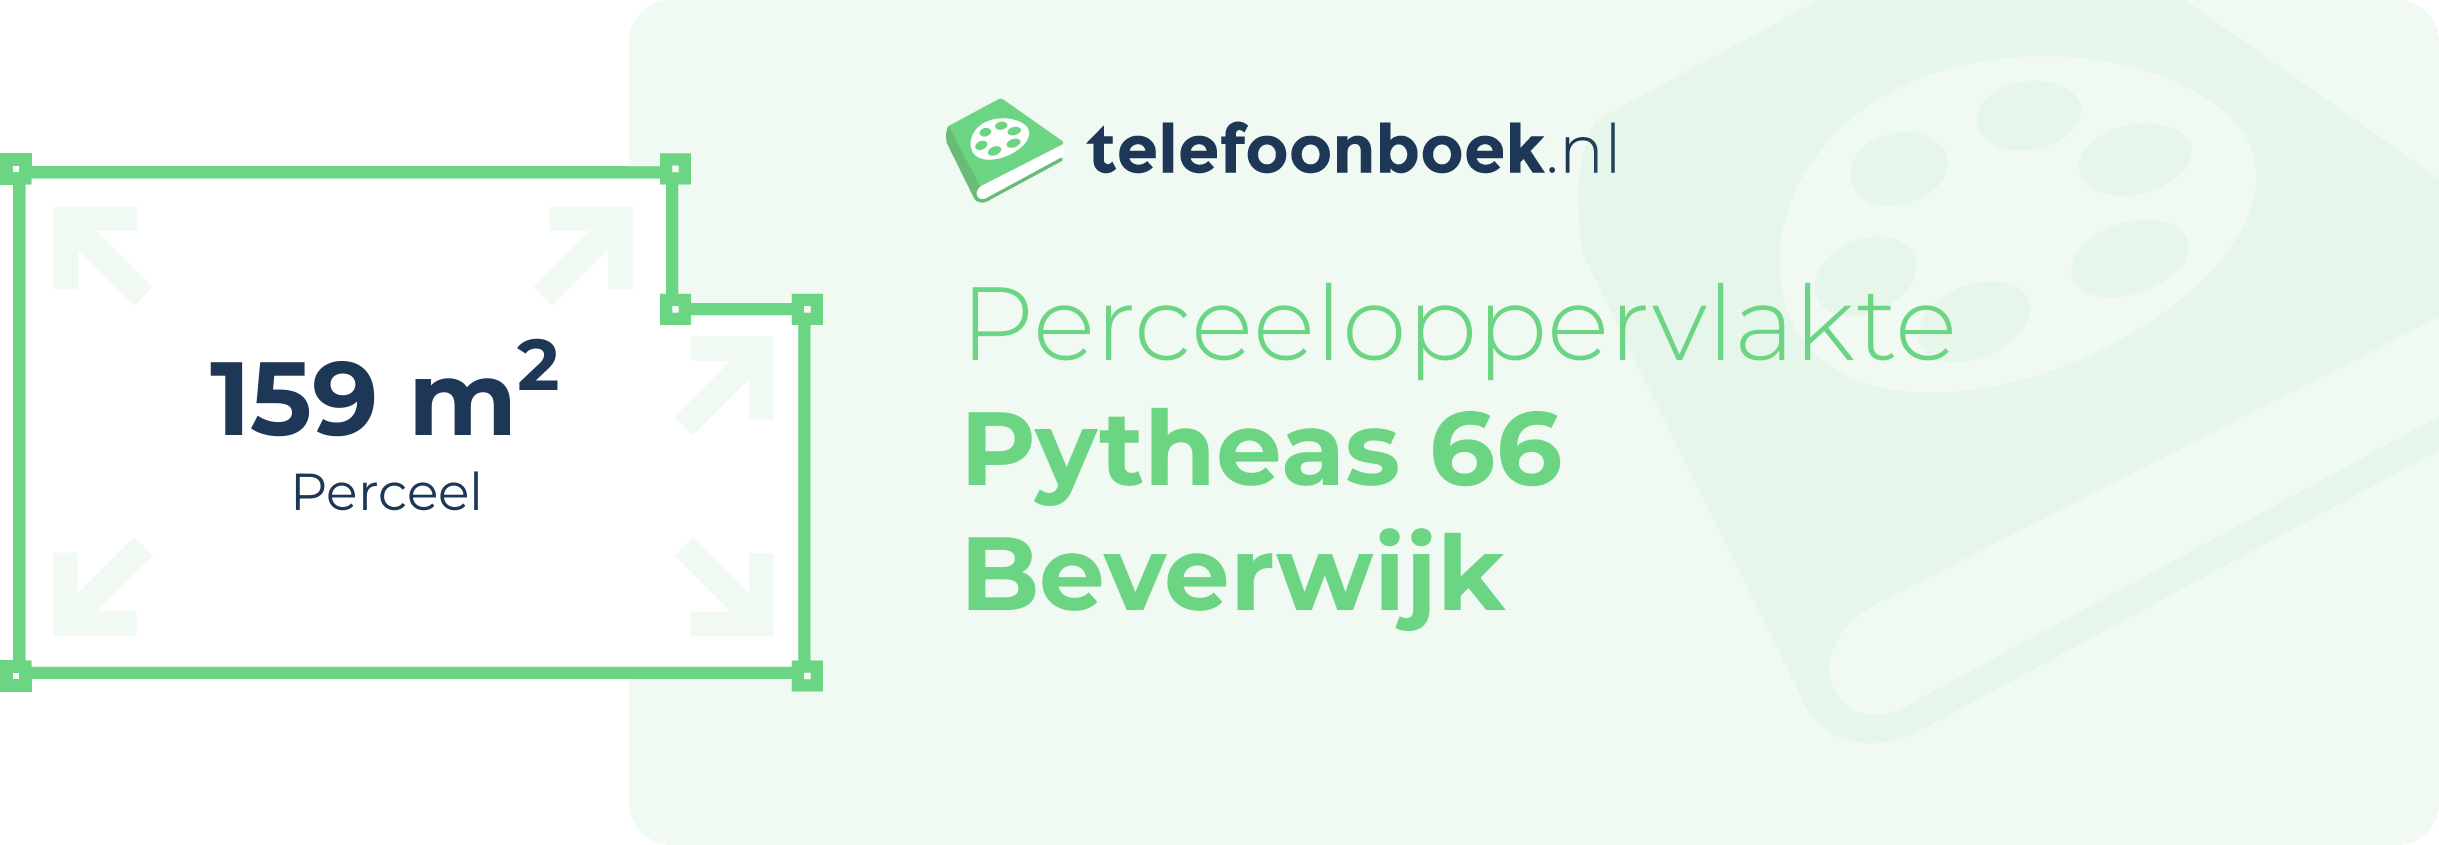 Perceeloppervlakte Pytheas 66 Beverwijk